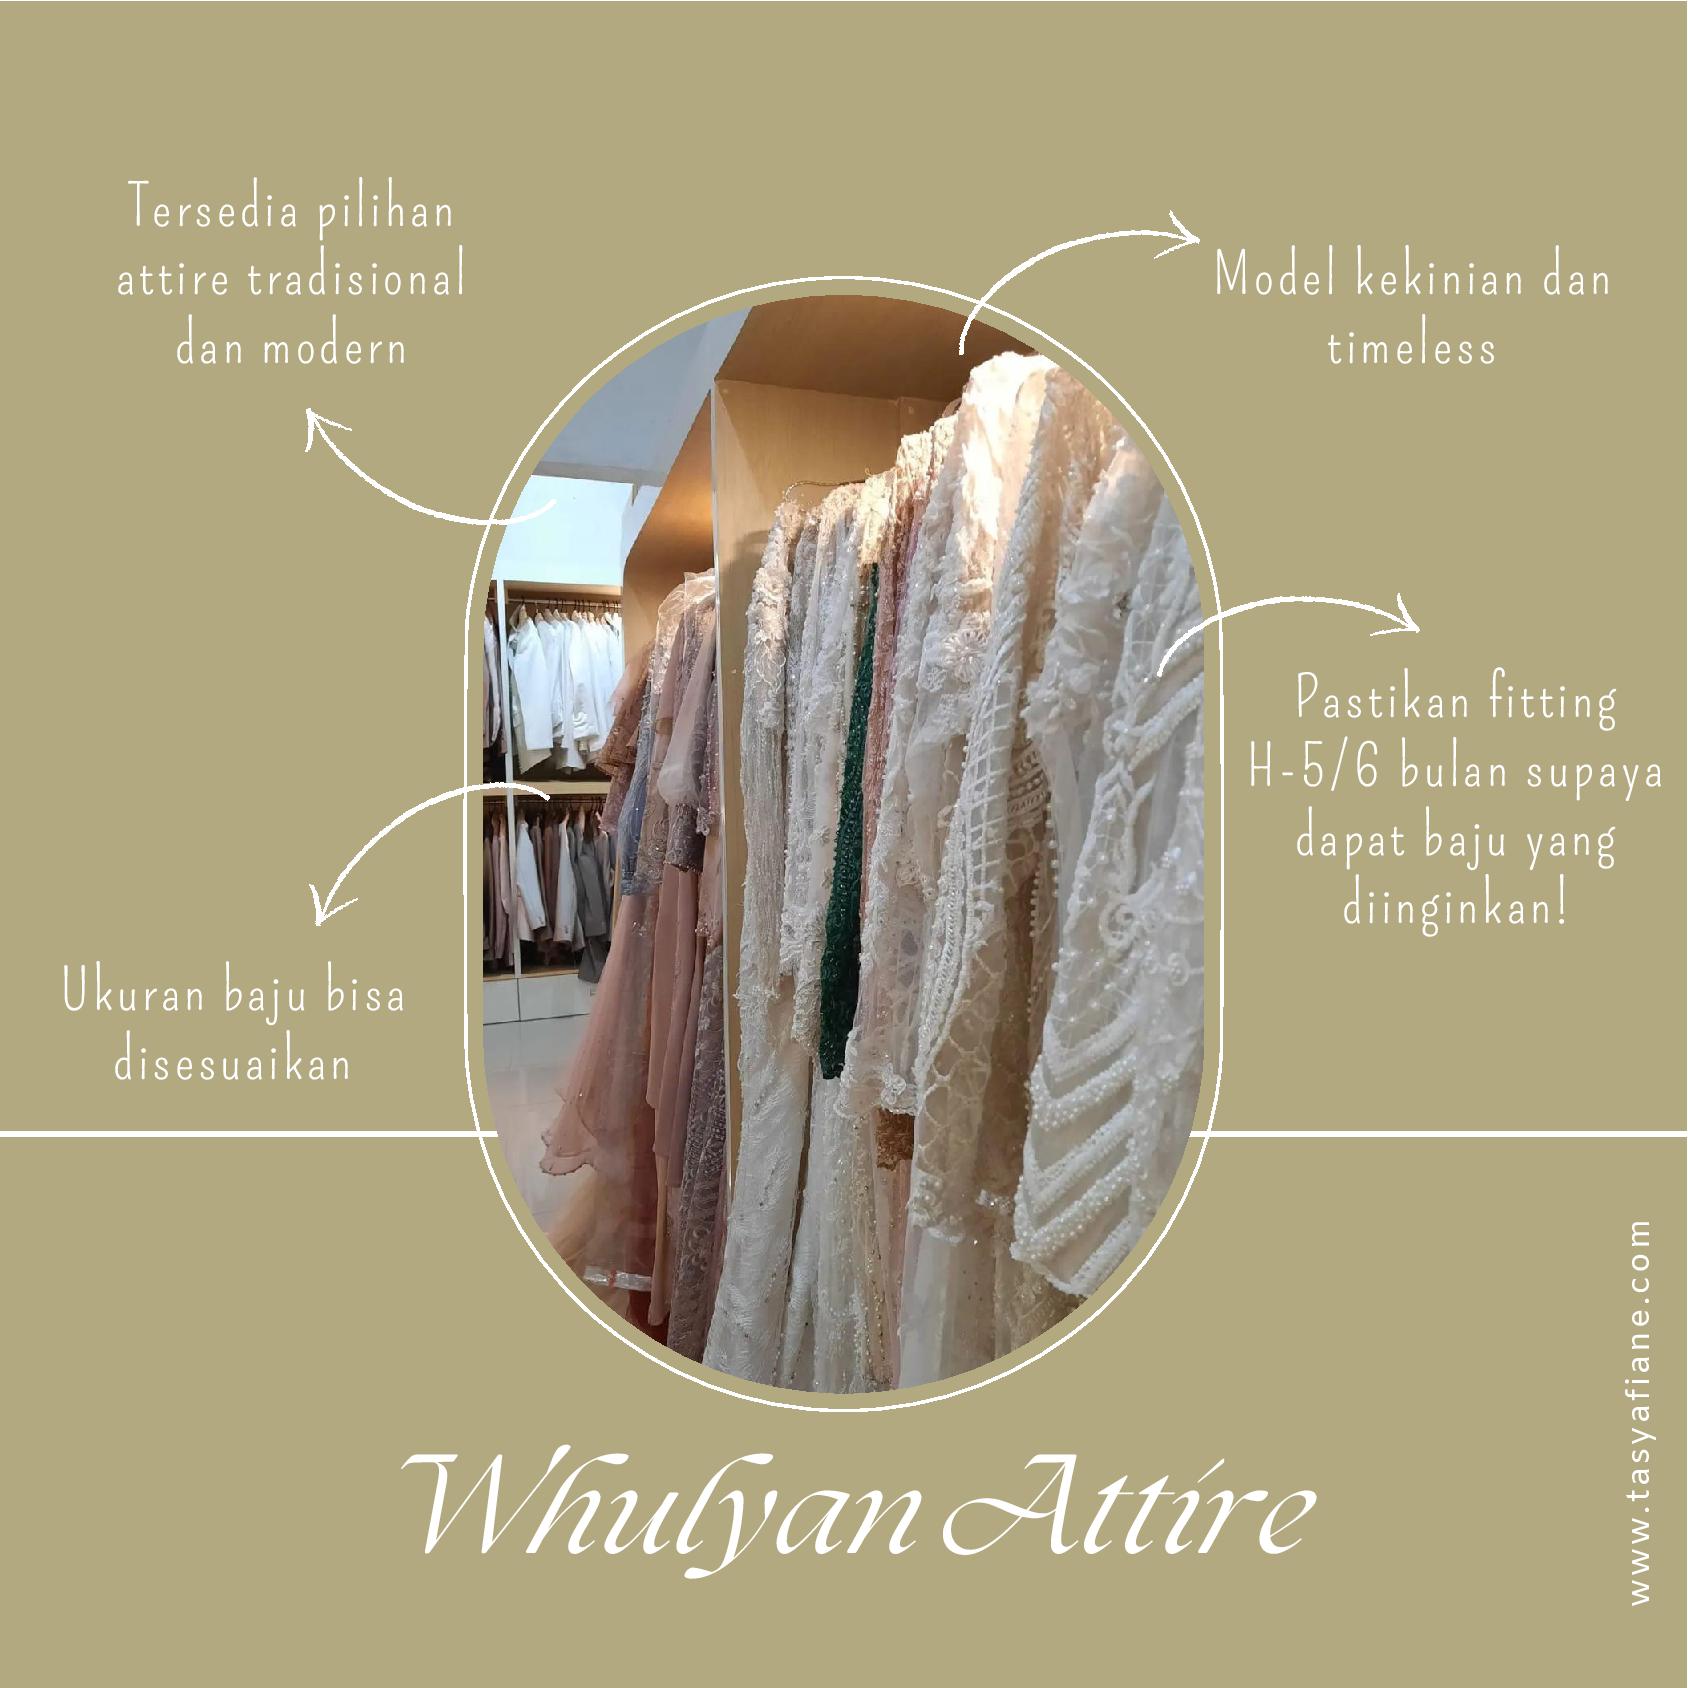 Fitting Baju Pengantin di Whulyan Attire